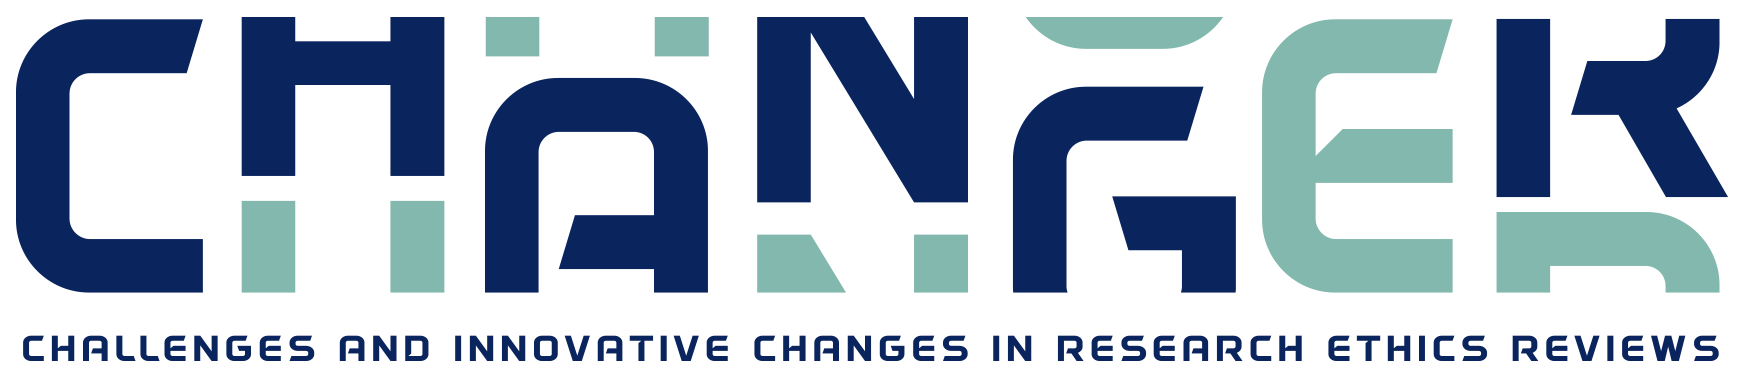 Changer logo 